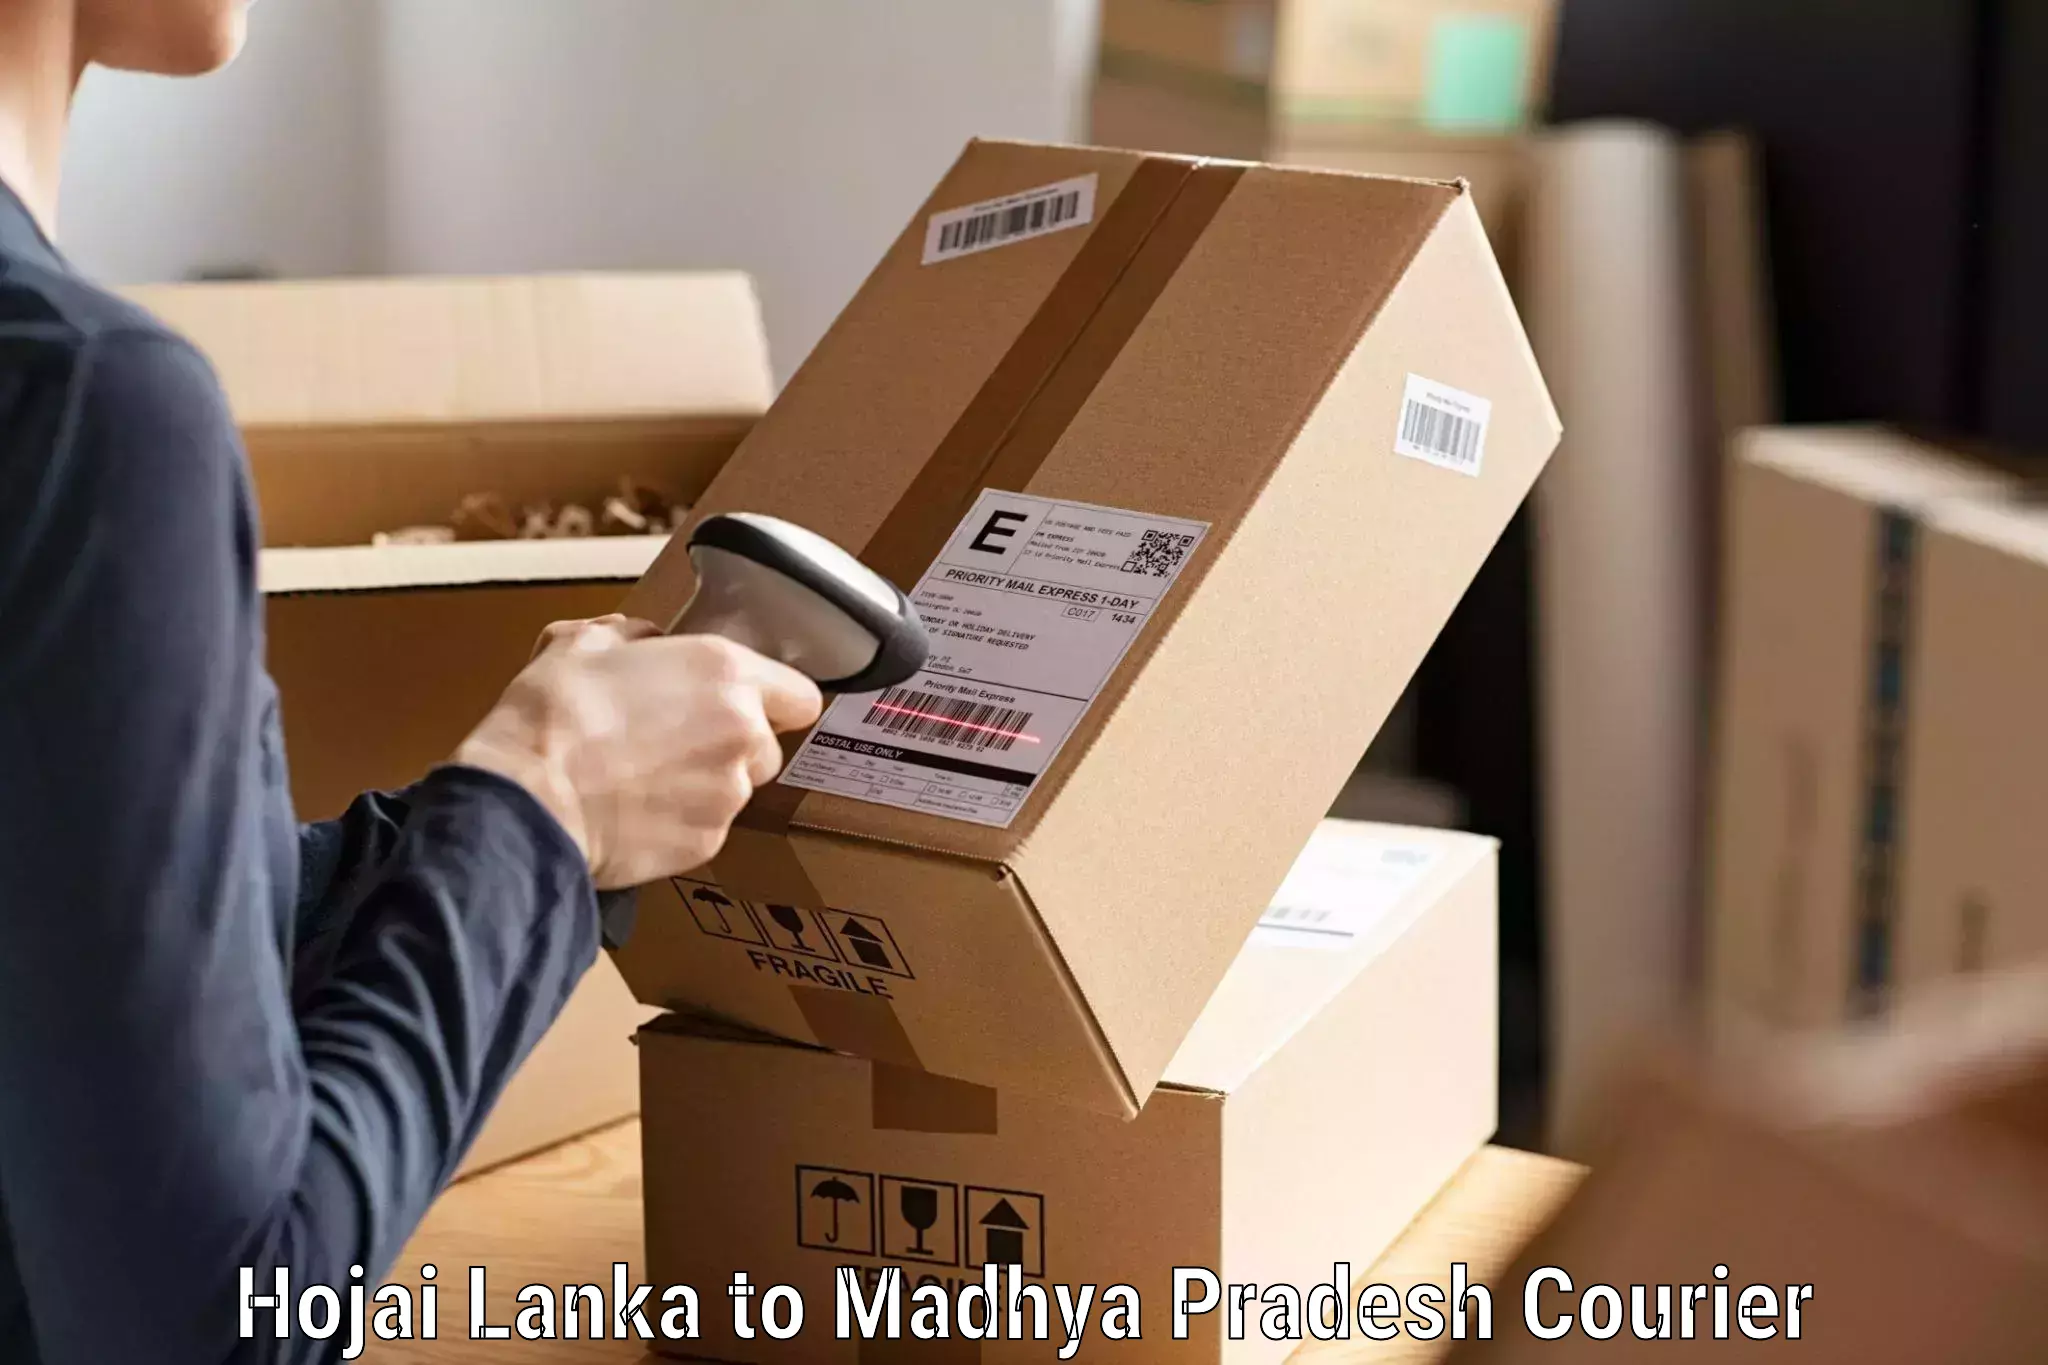 Online courier booking Hojai Lanka to Raipur Karchuliyan